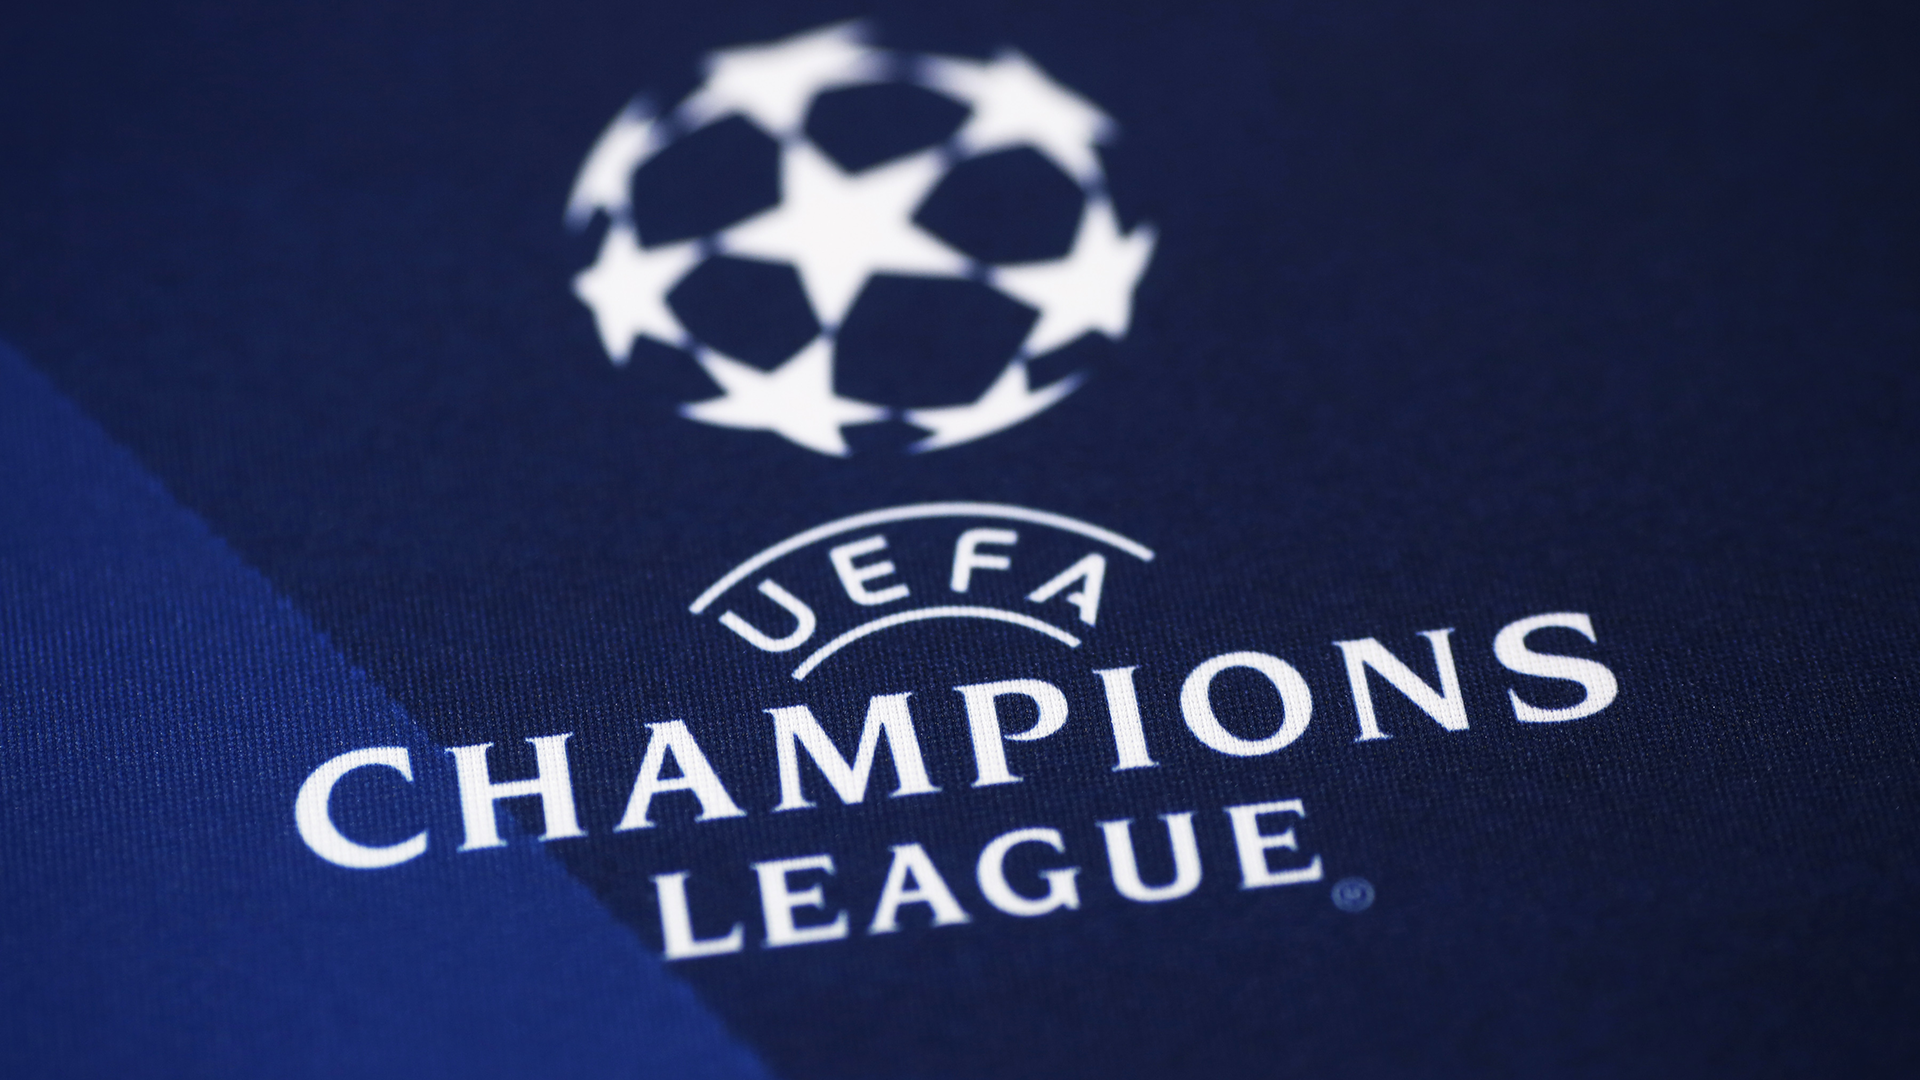 Champions League en vivo | Minuto a minuto de todos los partidos del 11 diciembre en directo: Estrella - PSG, Liverpool - Napoli, Inter - PSV, Barcelona | Goal.com Espana